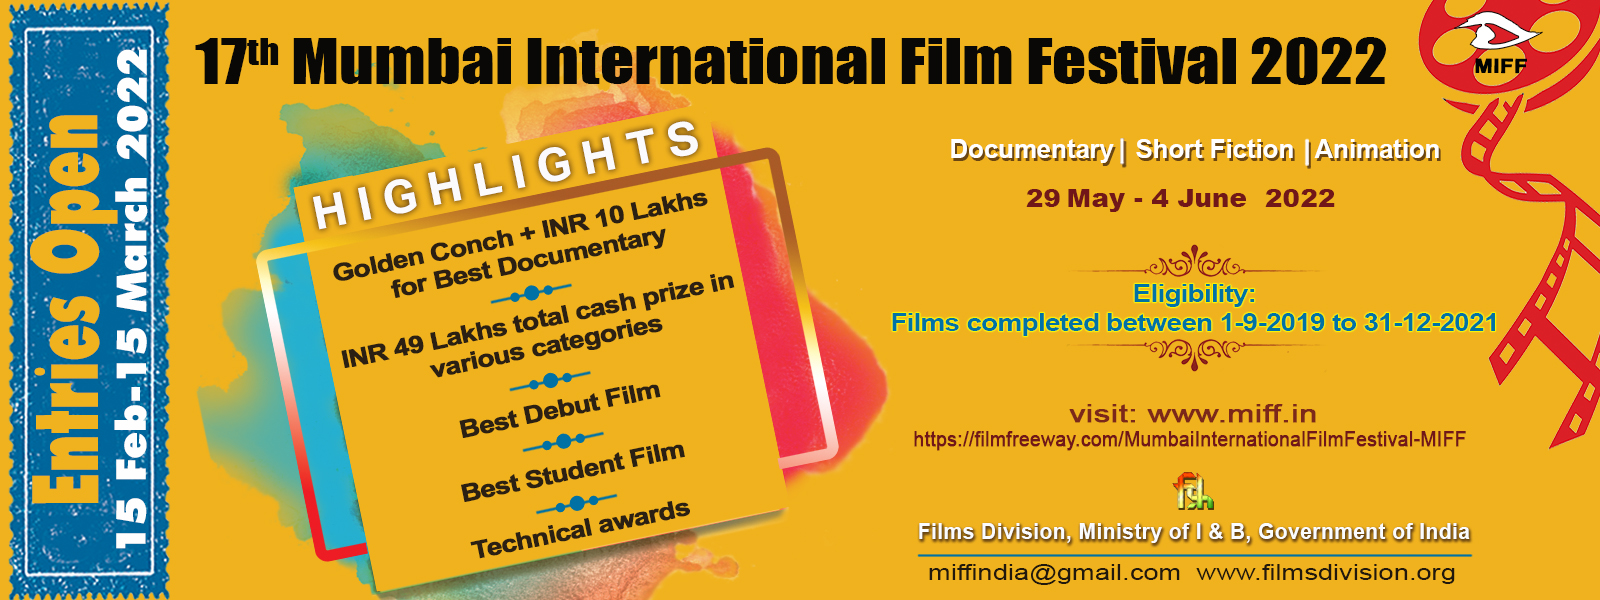 17th Mumbai International Film Festival for Documentary, Short Fiction & Animation Films